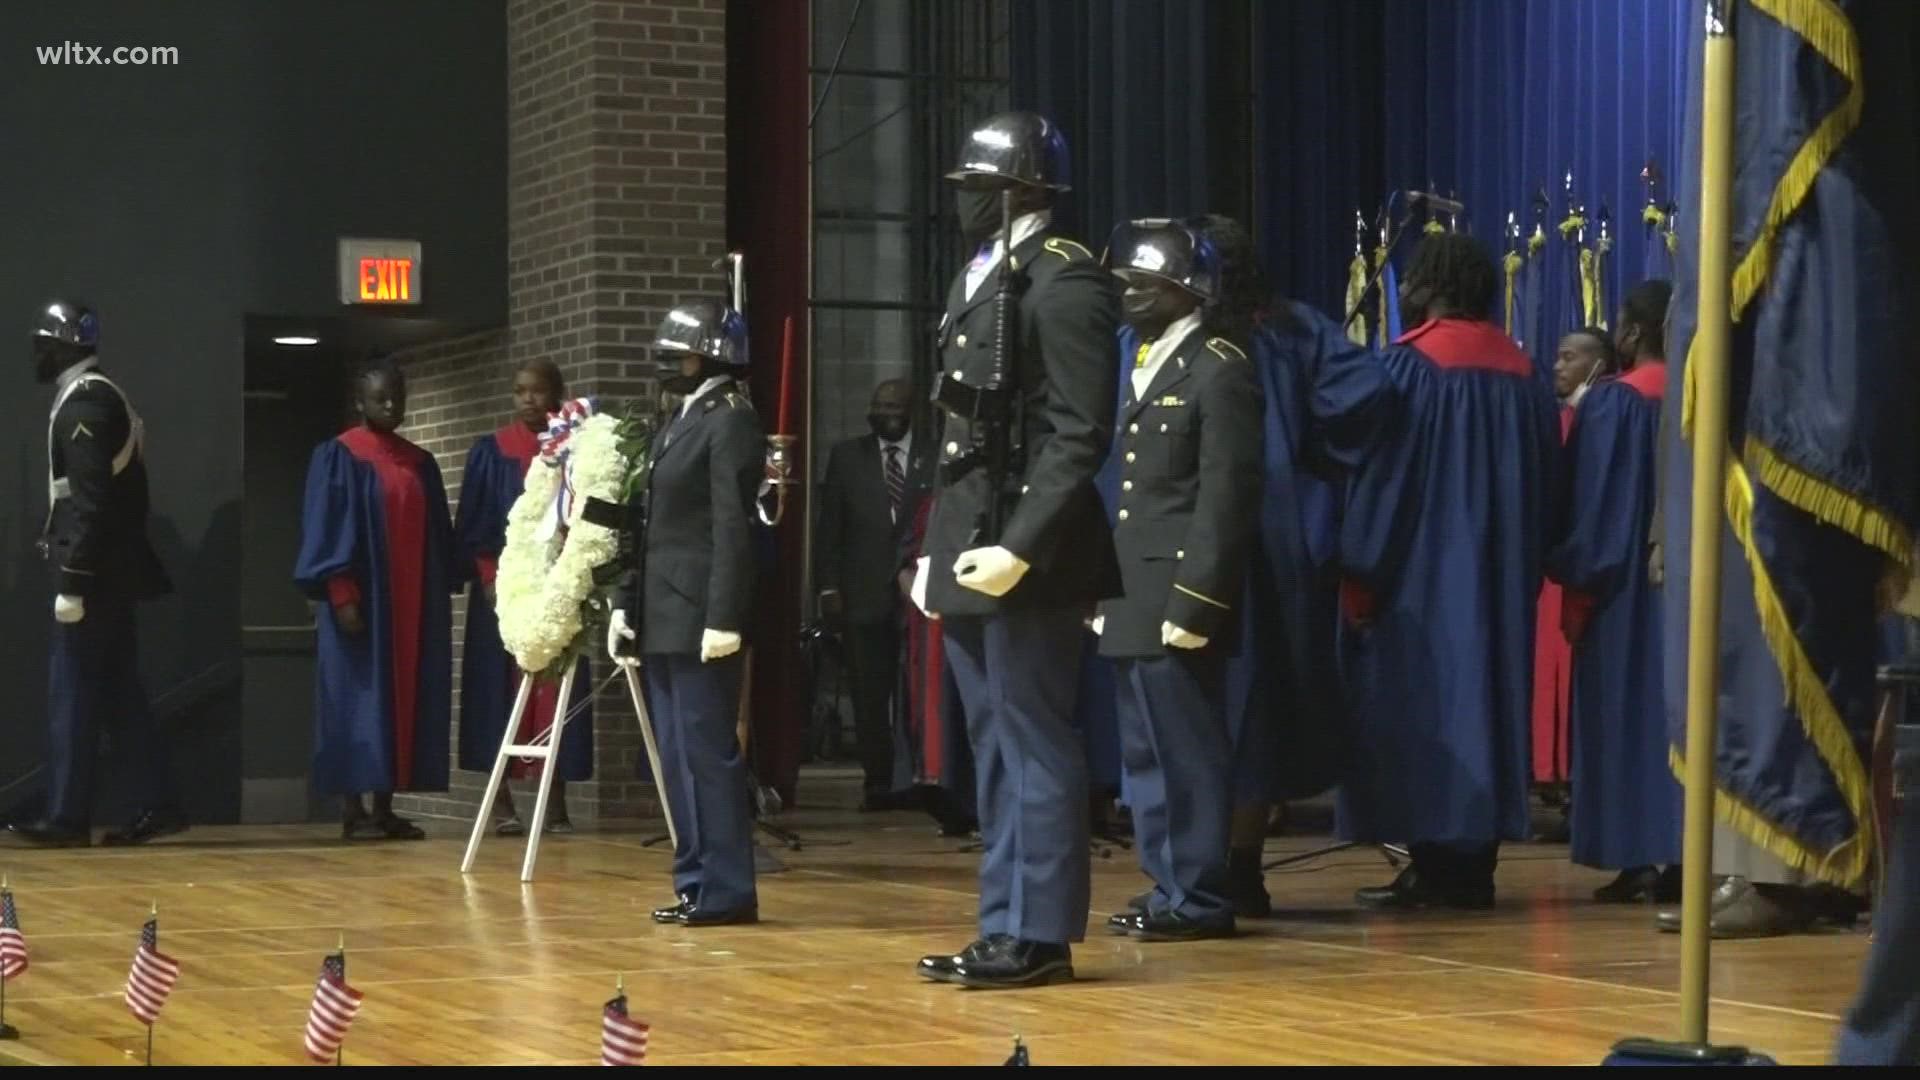 South Carolina State University held a ceremony honoring veterans on Veterans Day.